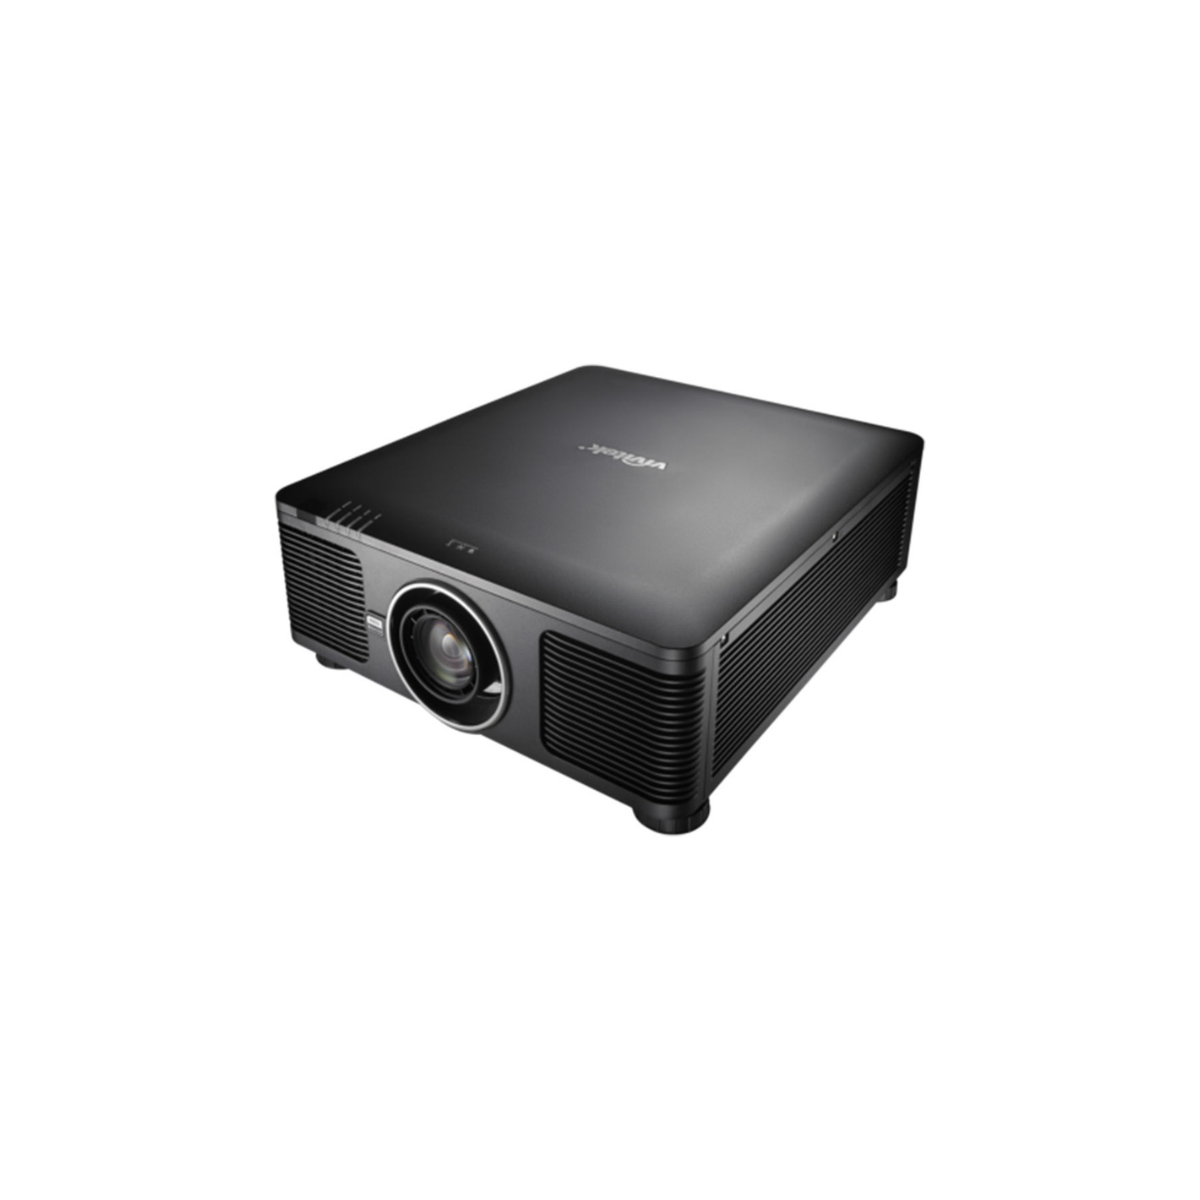 https://www.videoplusfrance.com/384383-product_full/vivitek-videoprojecteur-laser-dk10000z-uhd-10-000-lumens.jpg